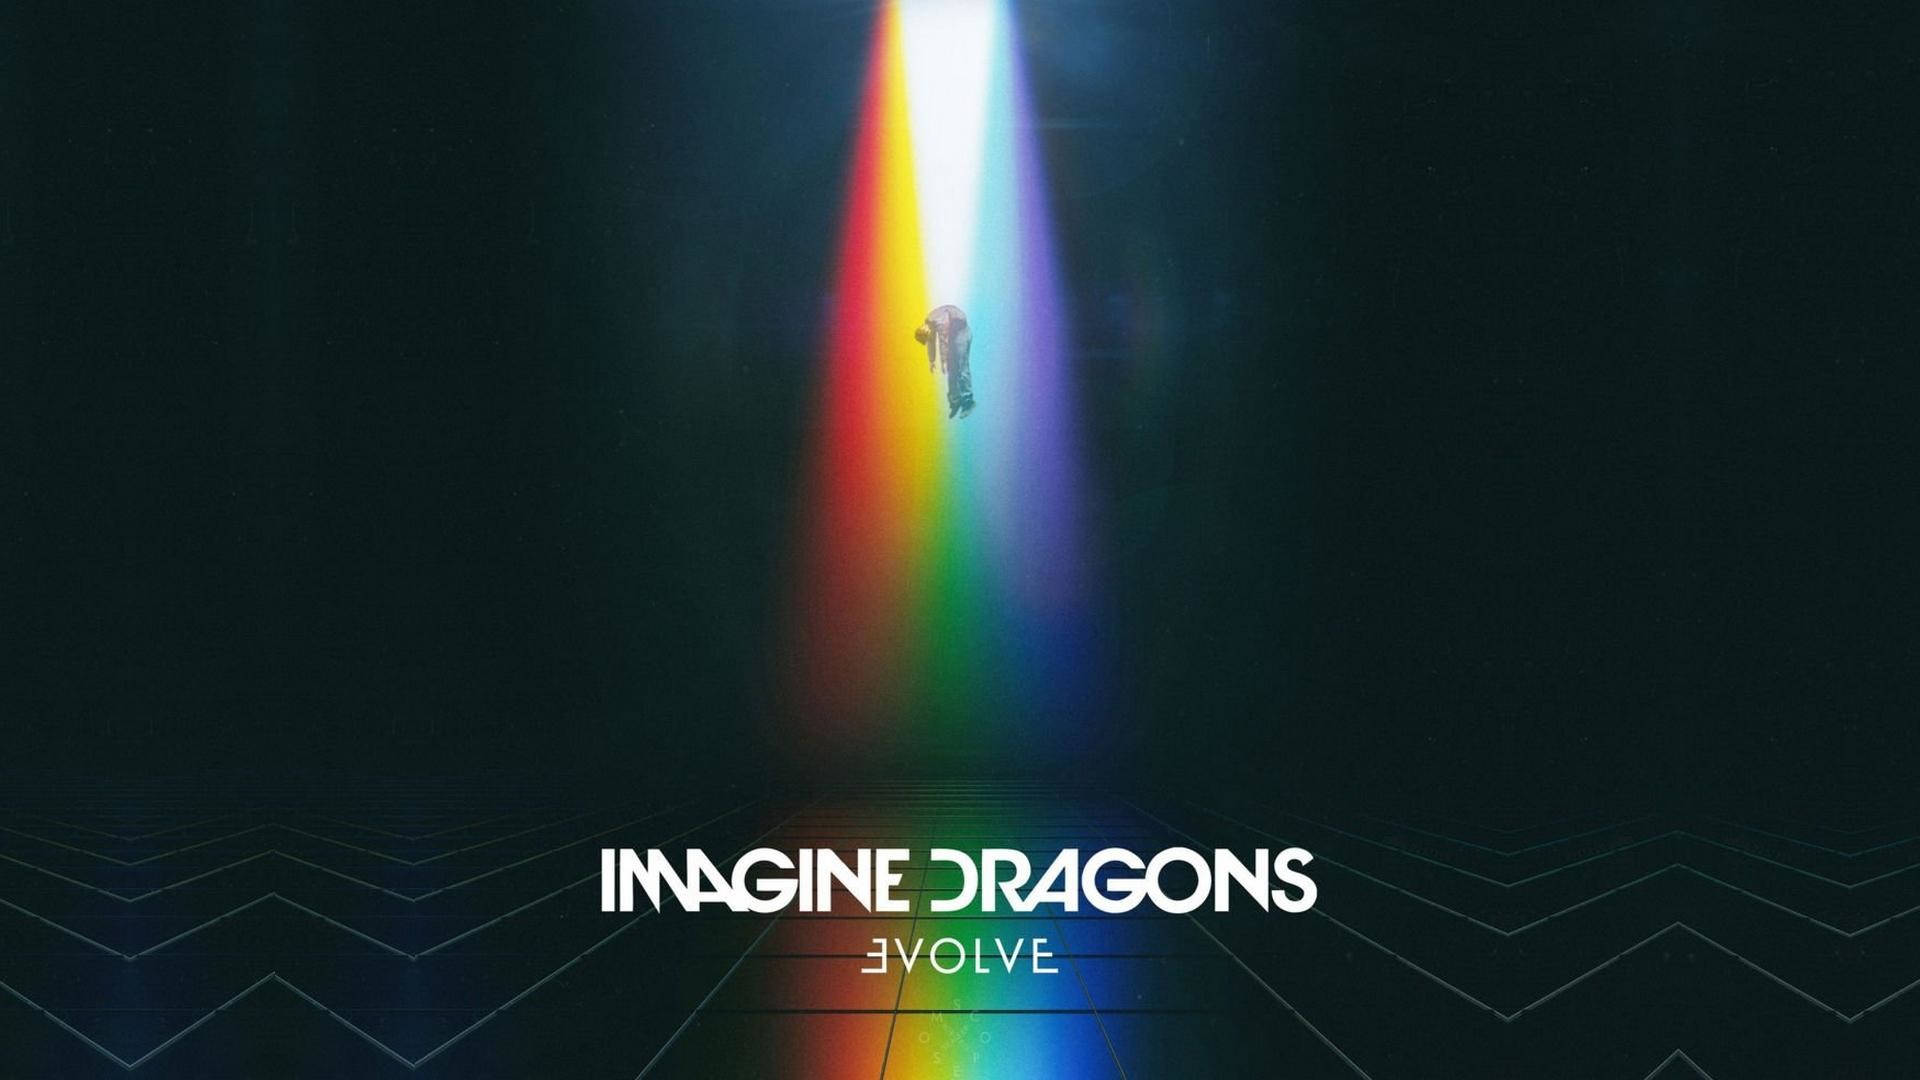 Imagine Dragons Evolve Official Poster